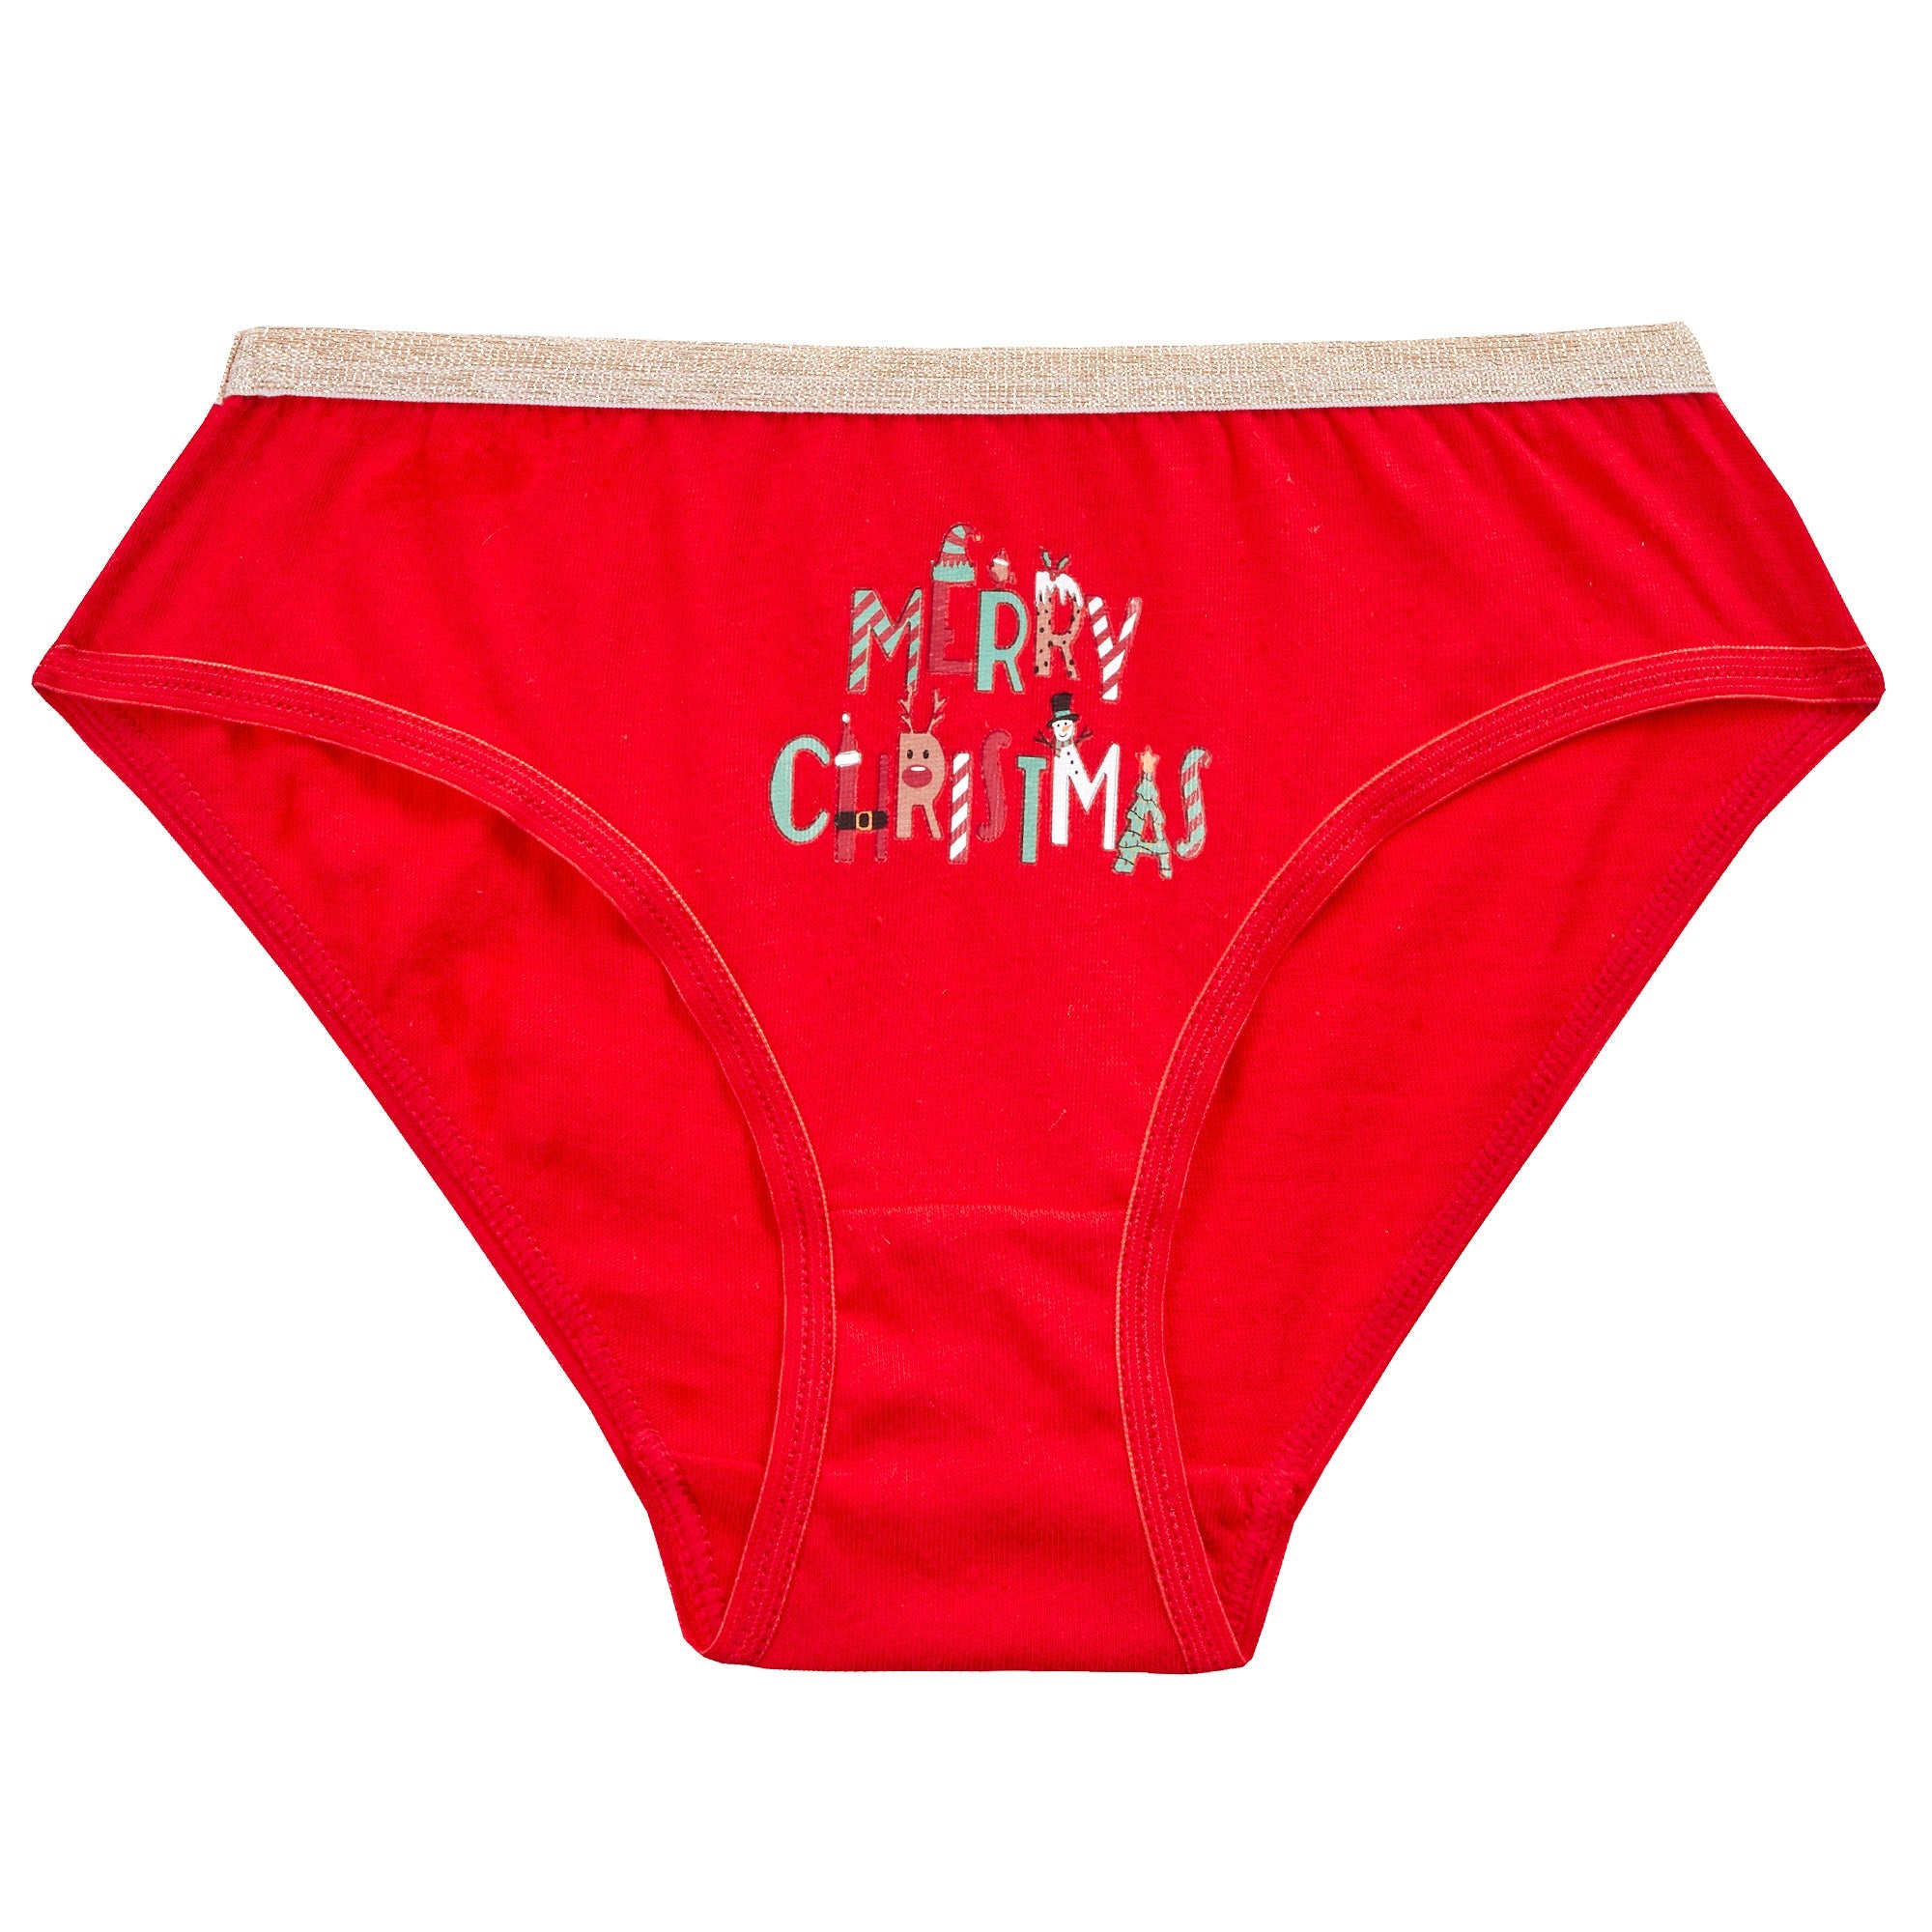 Womens underwear size uk12 Christmas briefs scarlet red & white satin  knickers